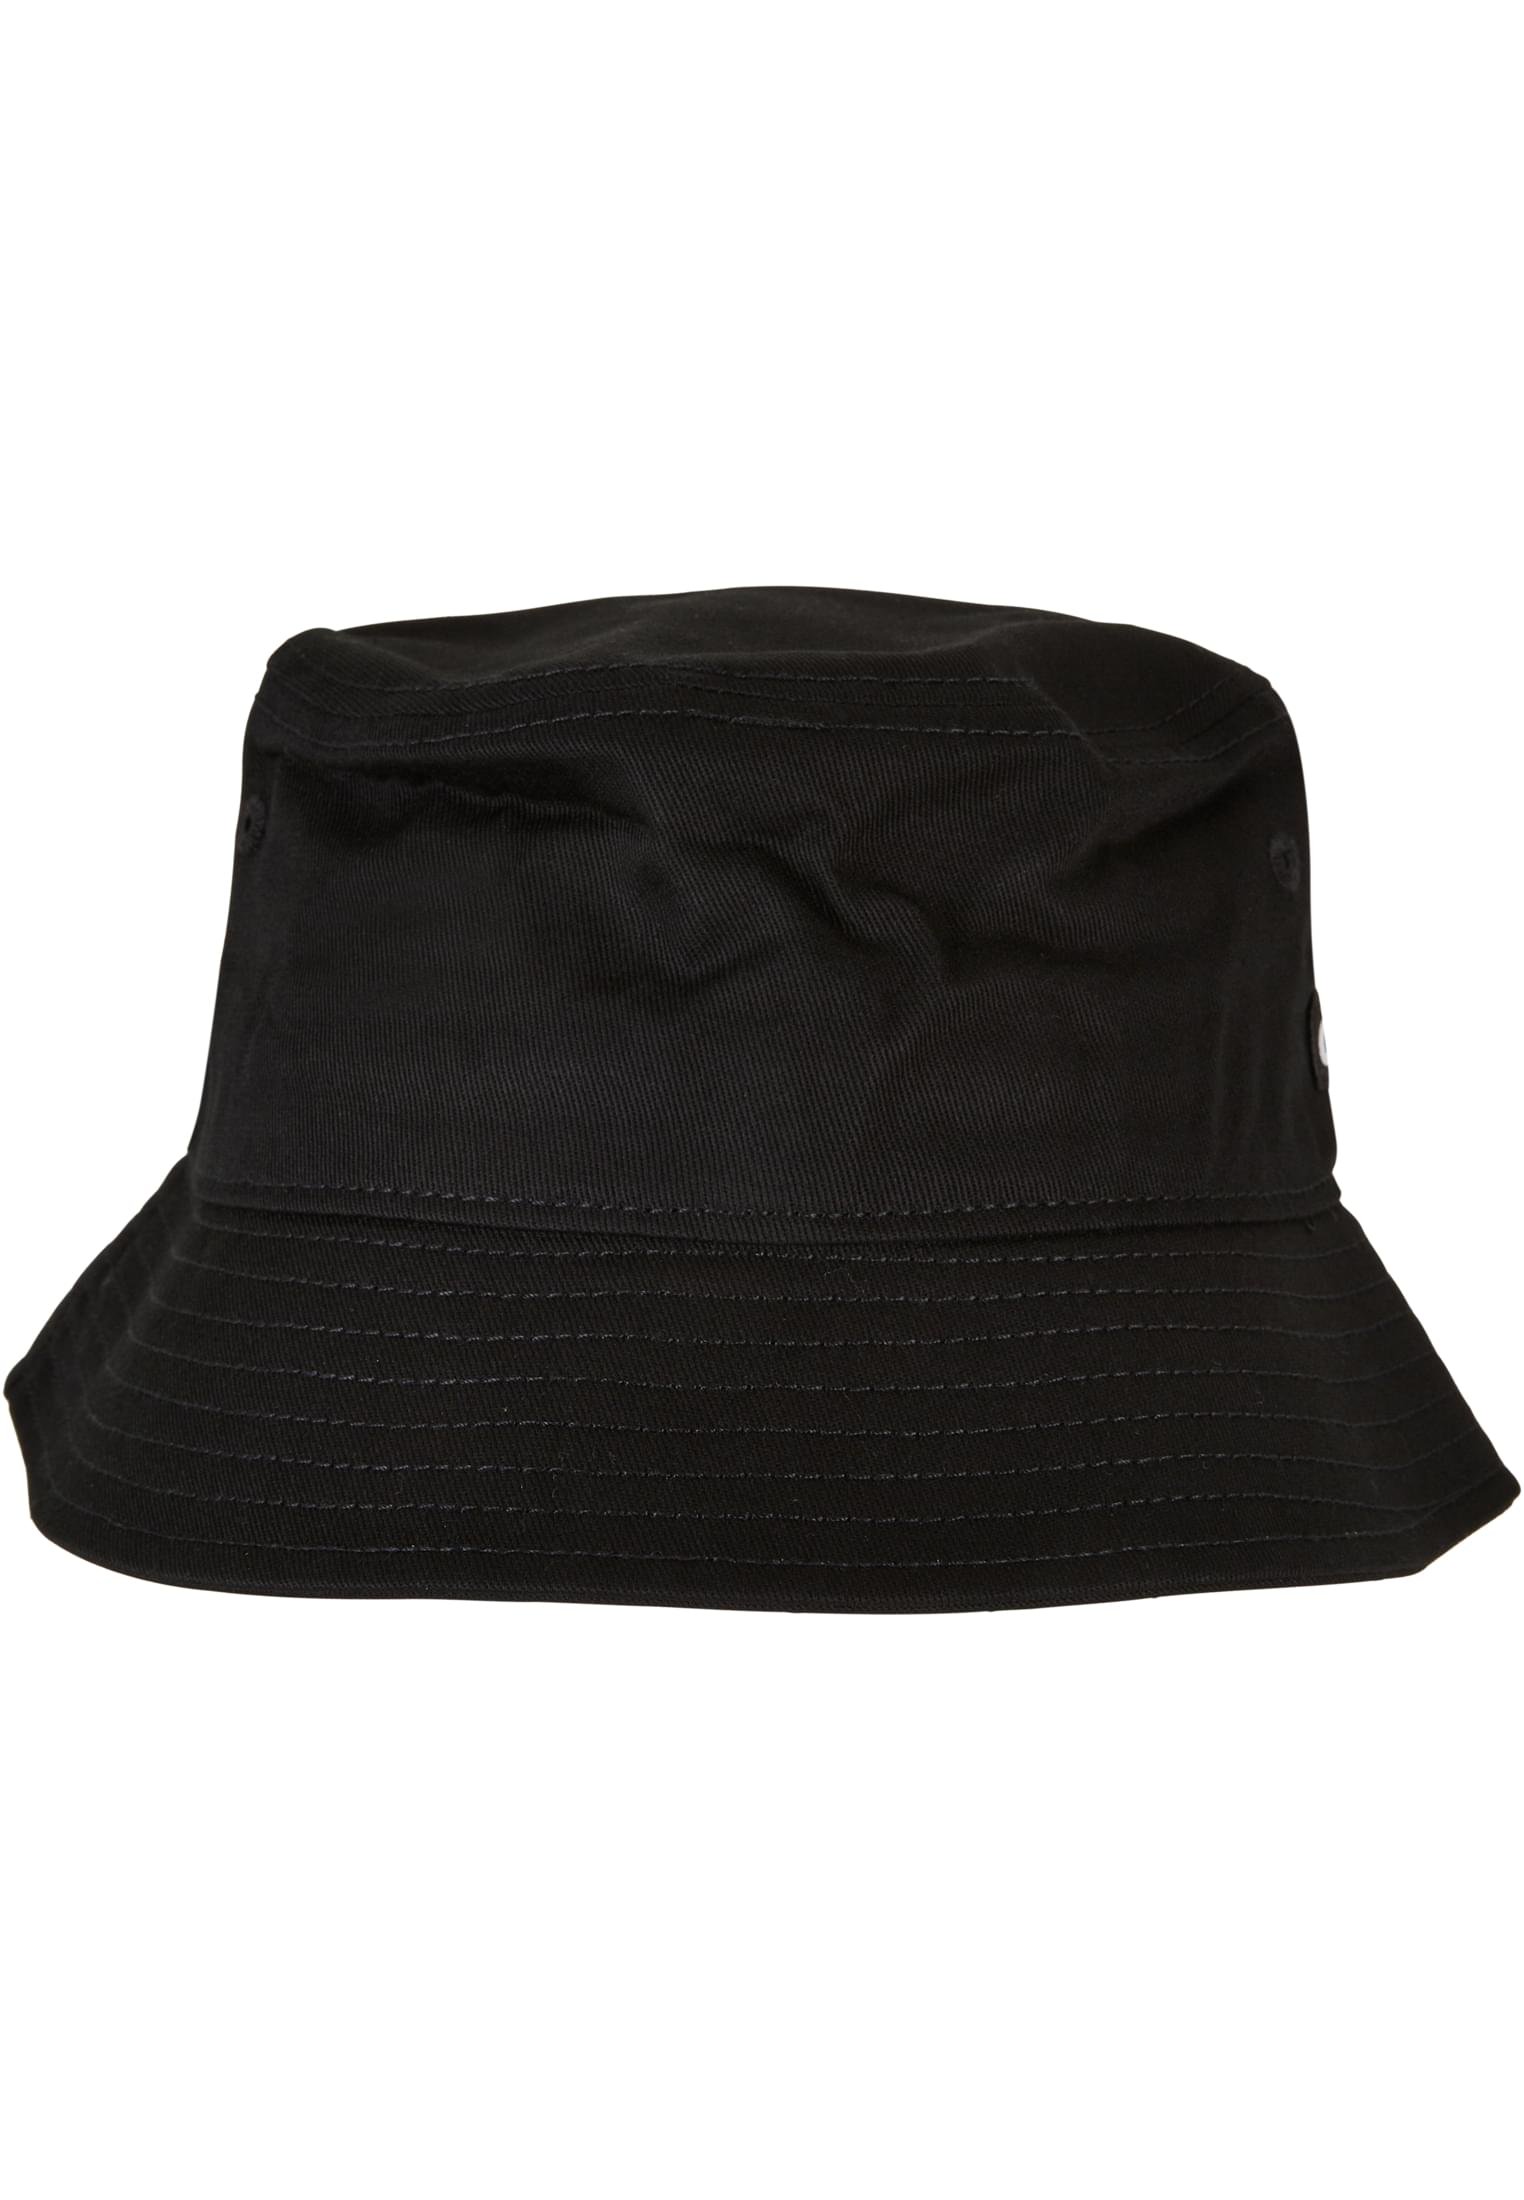 Cayler Basic Bucket Hat blk/neonyellow one size